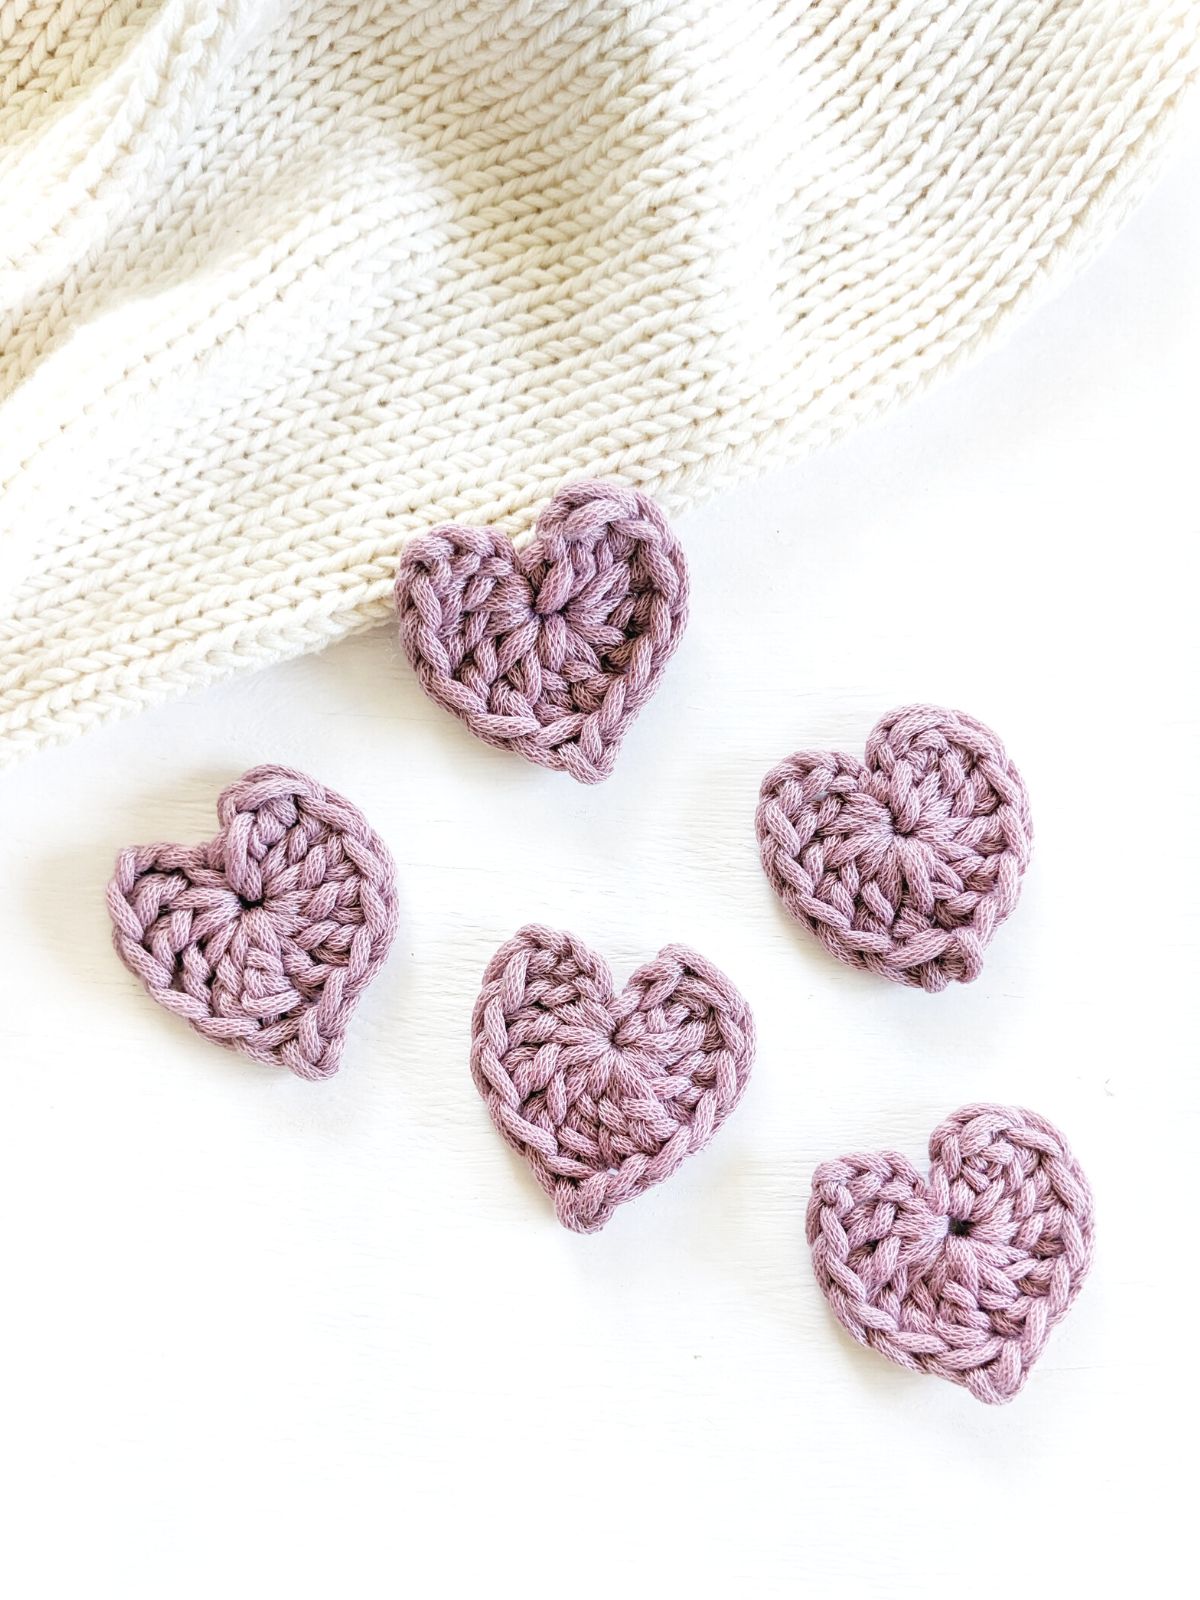 10. Crochet Mini Heart Design